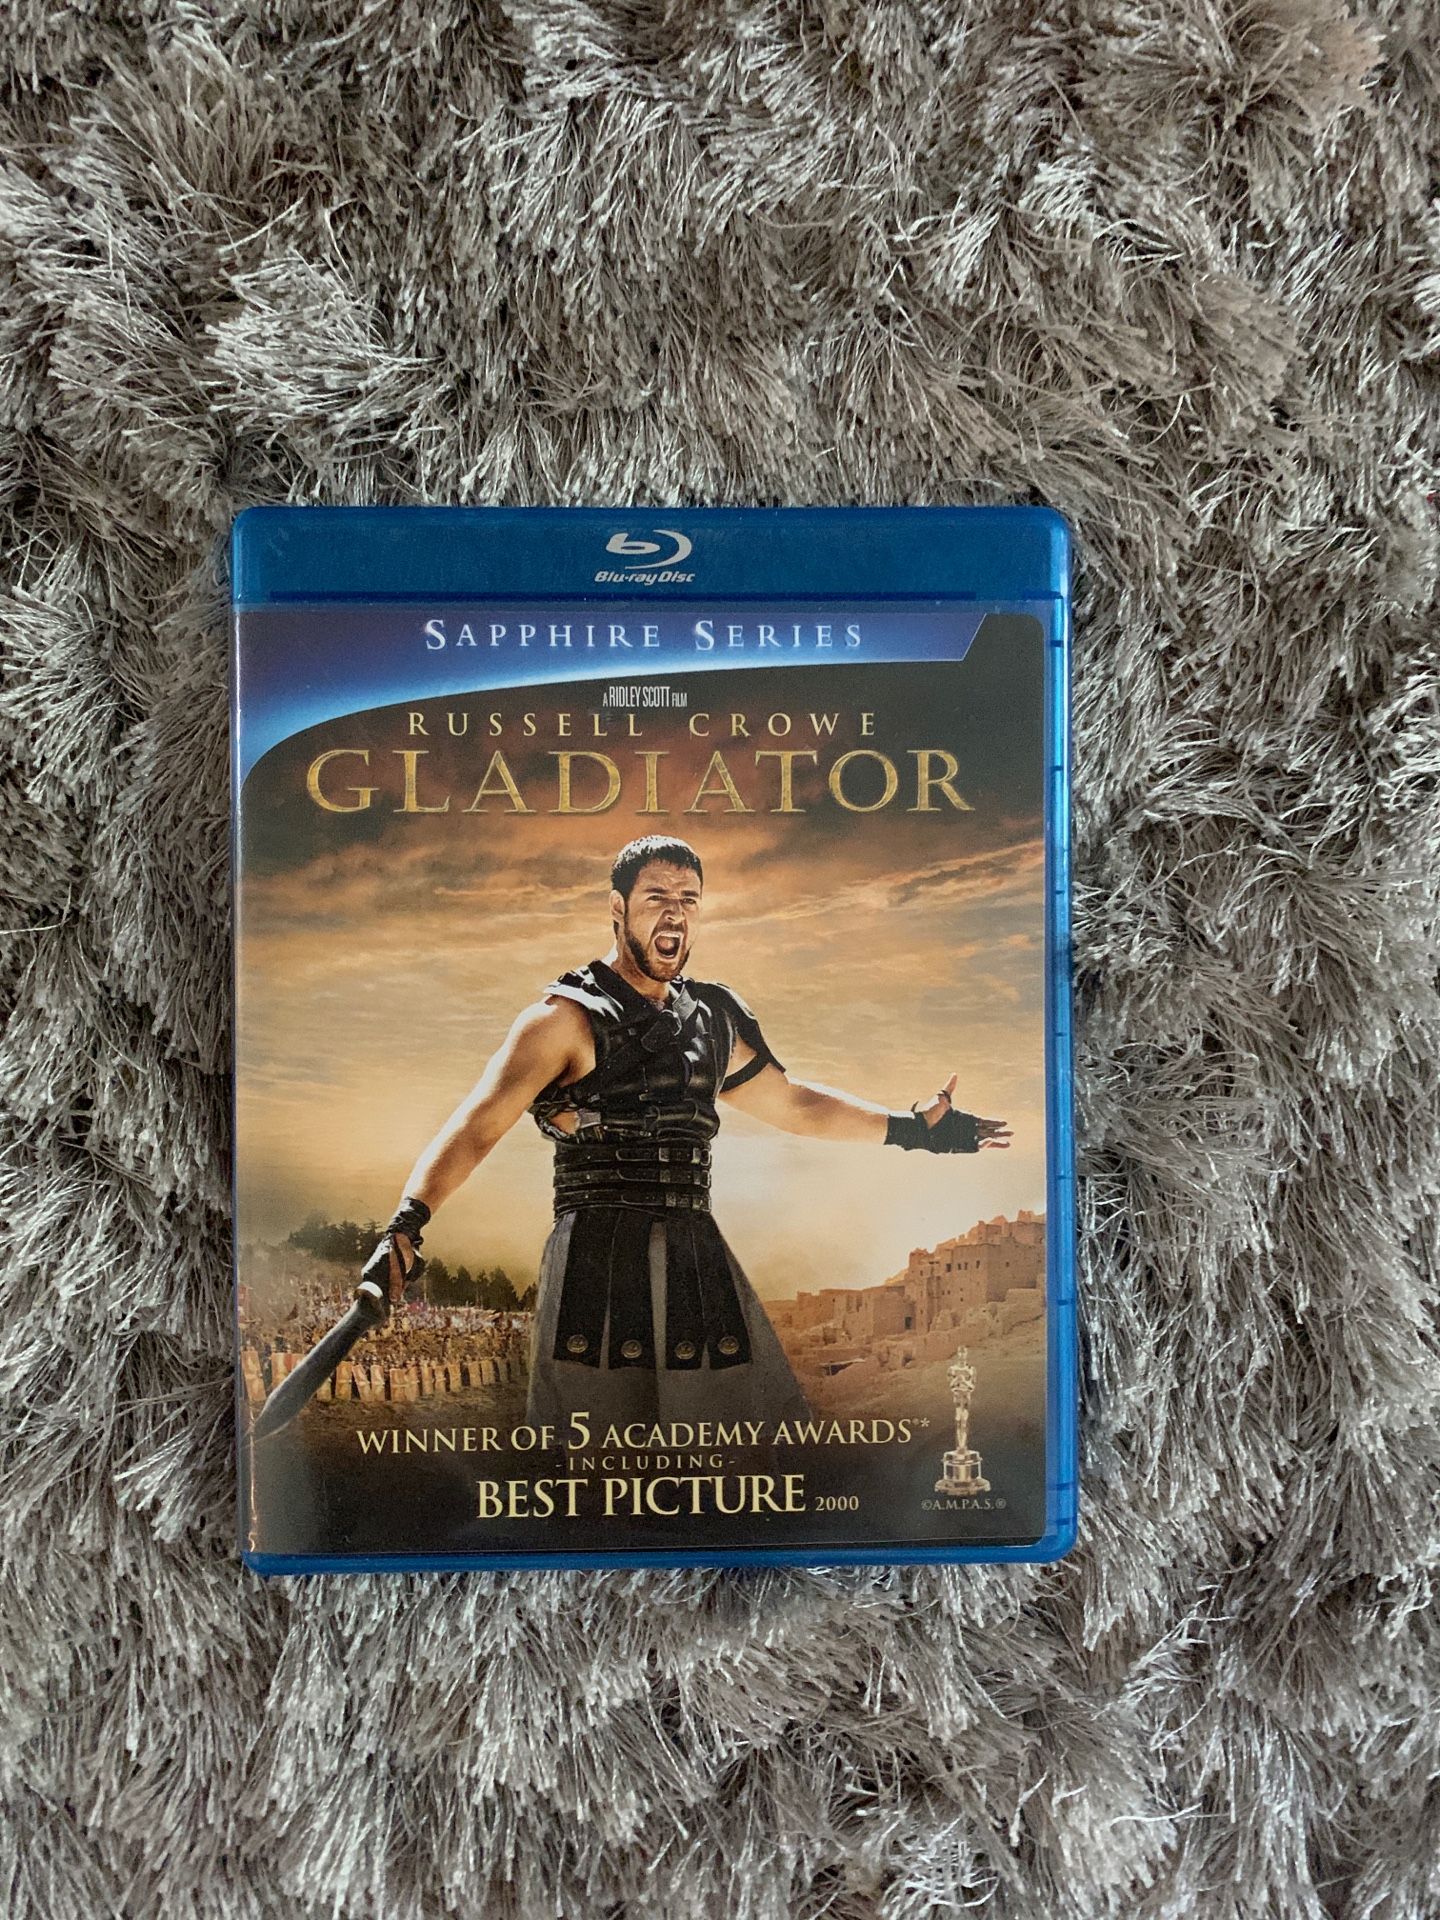 Gladiator series